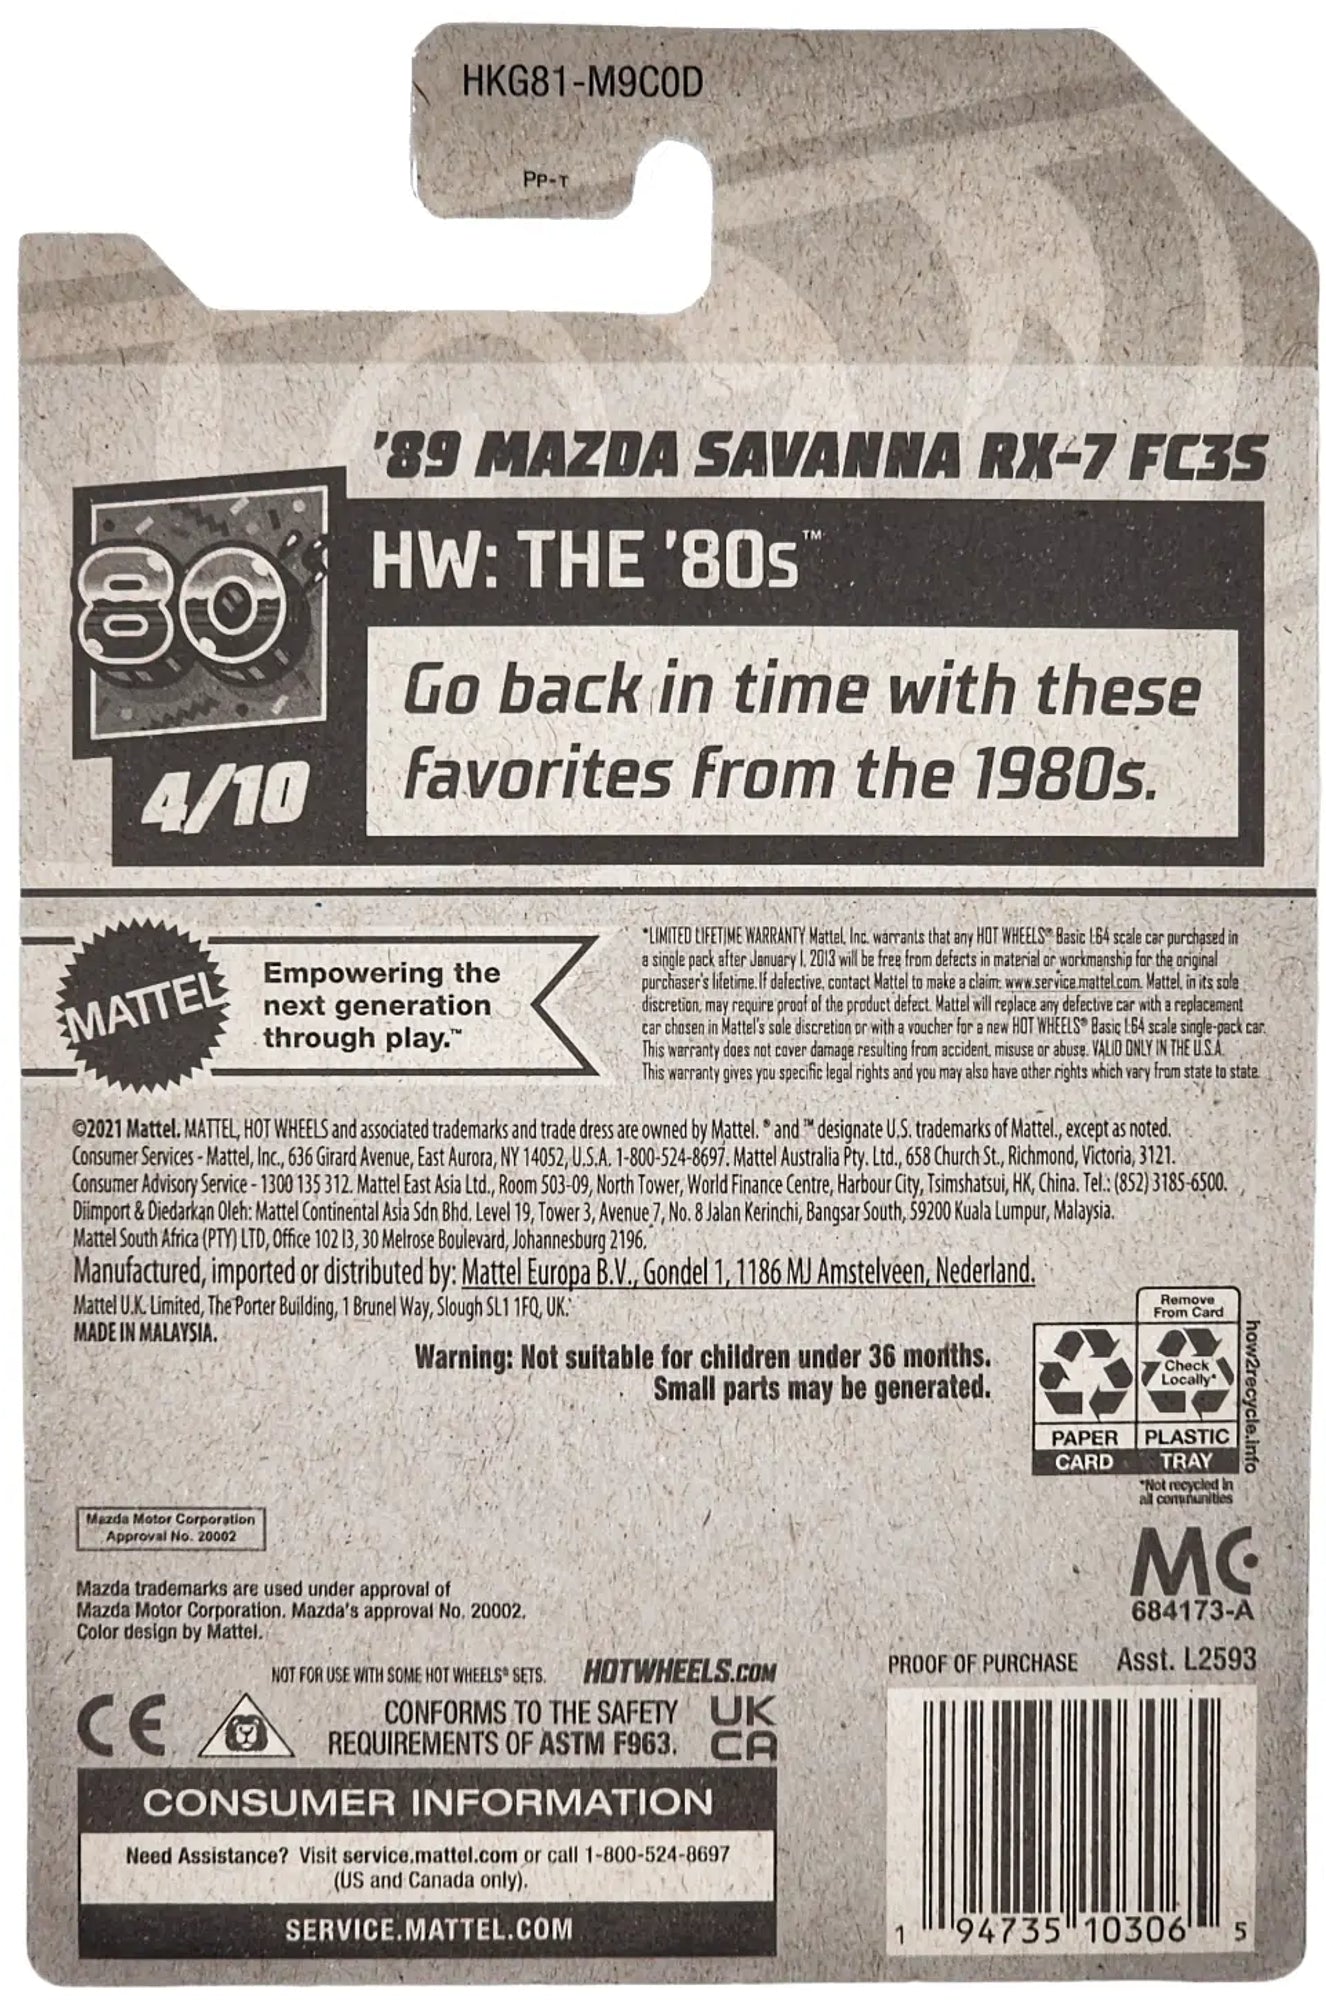 Hot Wheels '89 Mazda Savanna RX-7 FC3S HW The '80s HKG81